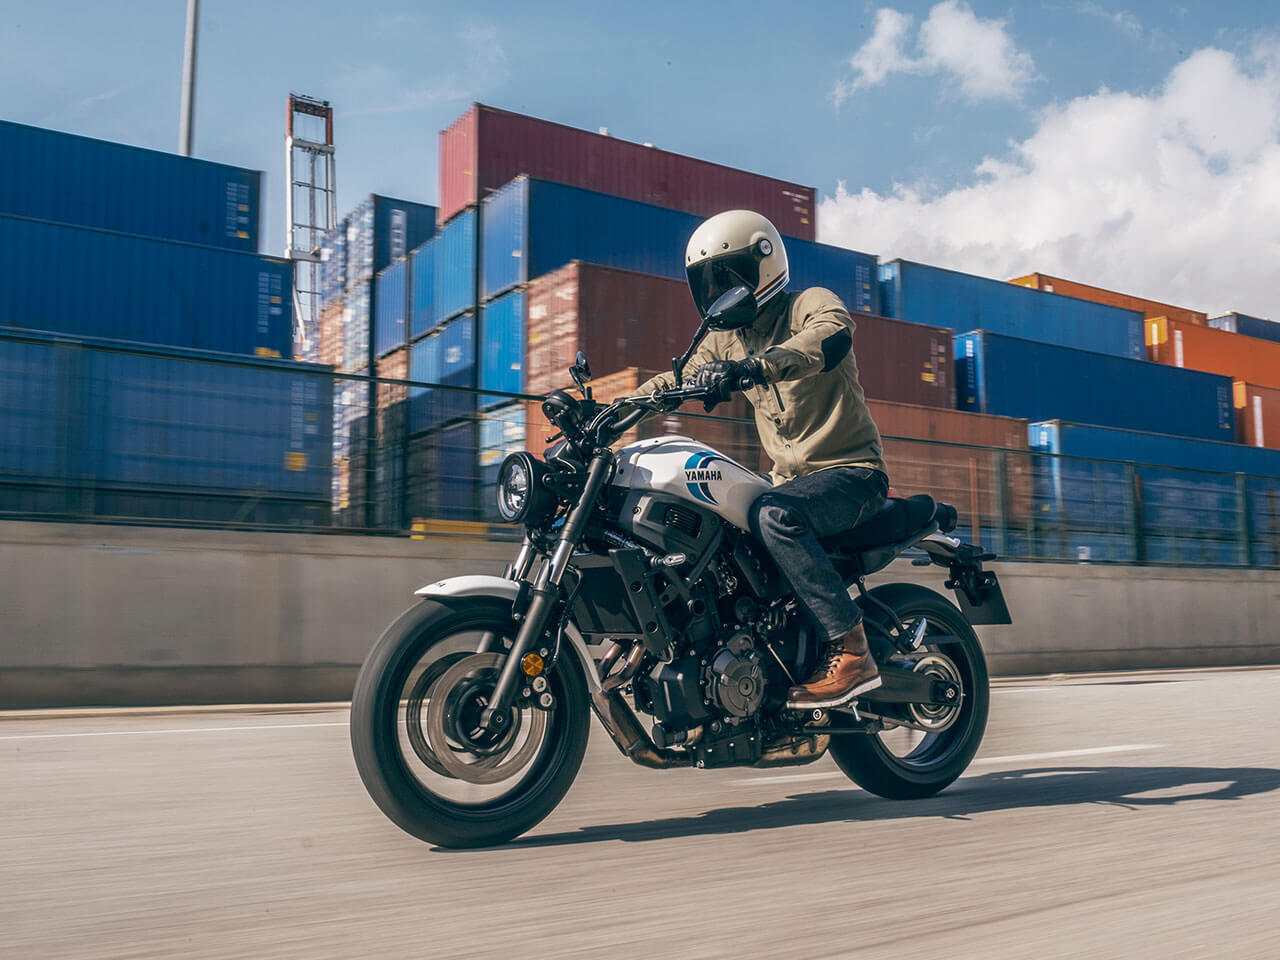  A 2020 Yamaha XSR700 motorcycle rides along a cargo container terminal